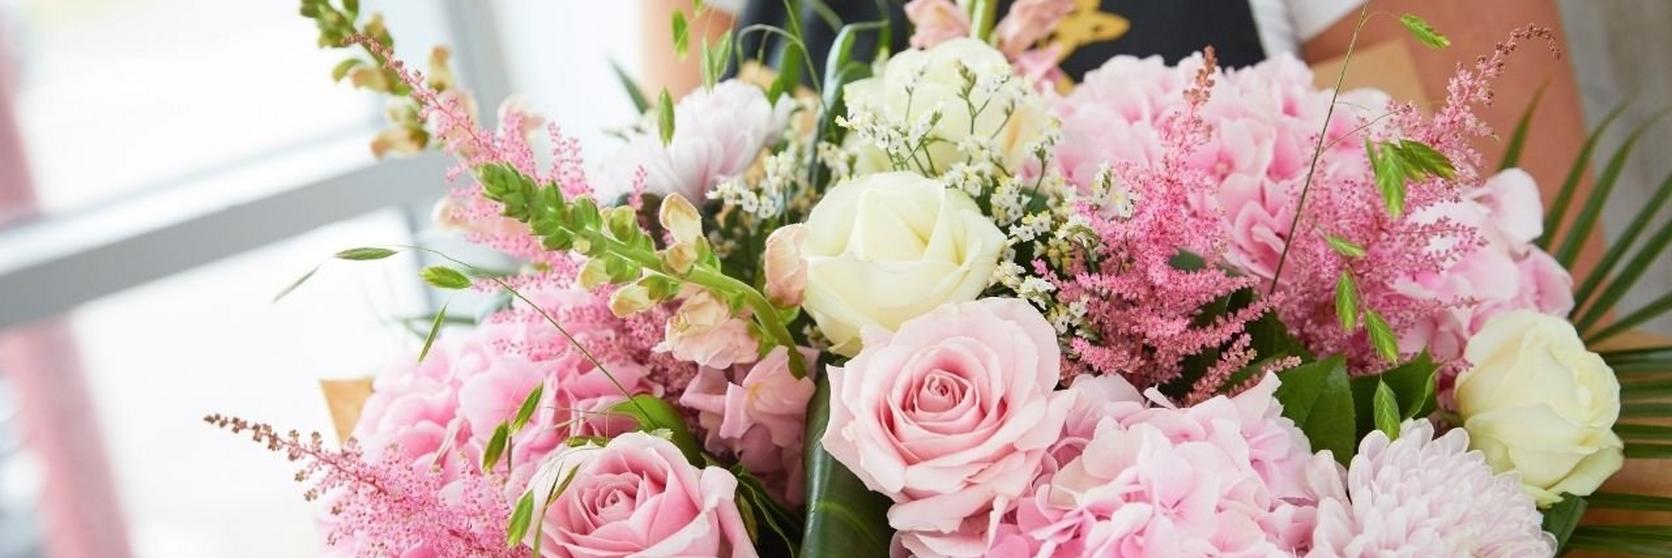 Interflora-florist-pink-white-bouquet